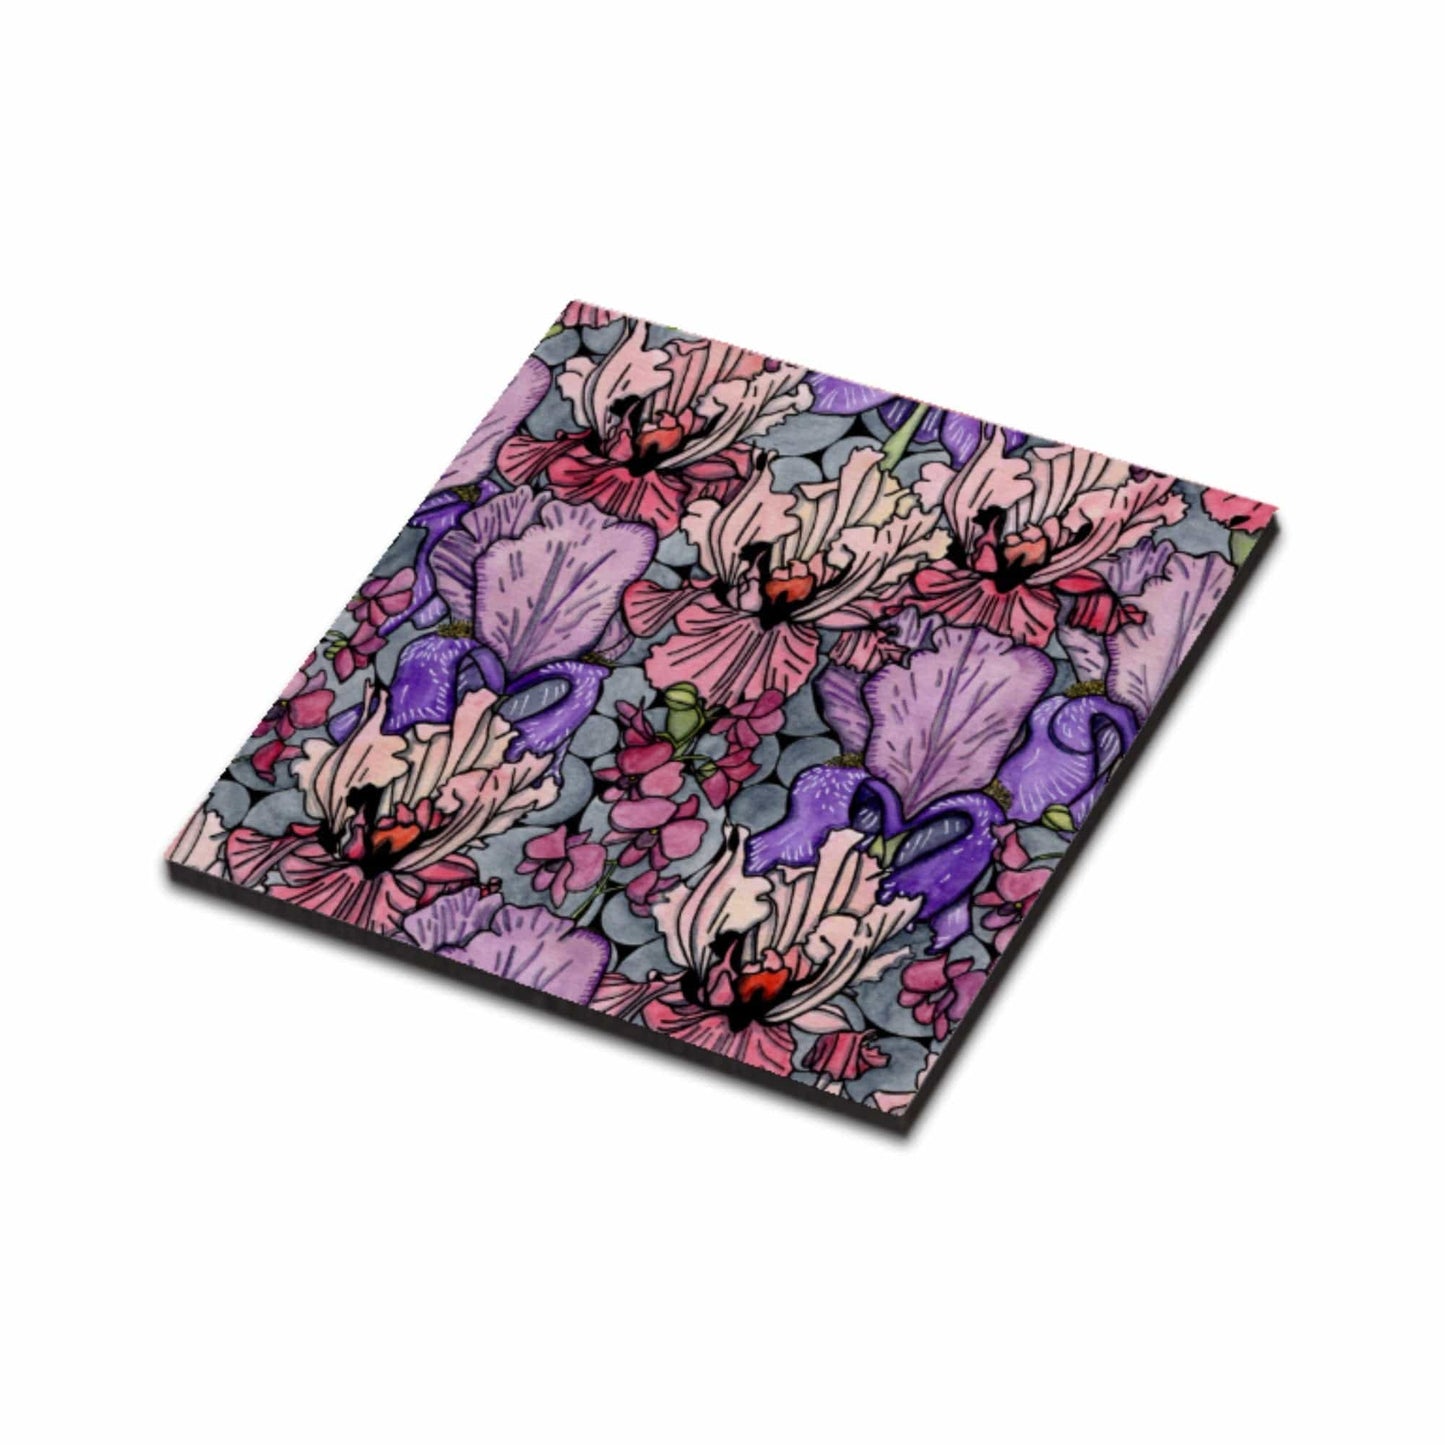 PinkPolish Design Magnets "Floral Repetition" Wood Refrigerator Magnet